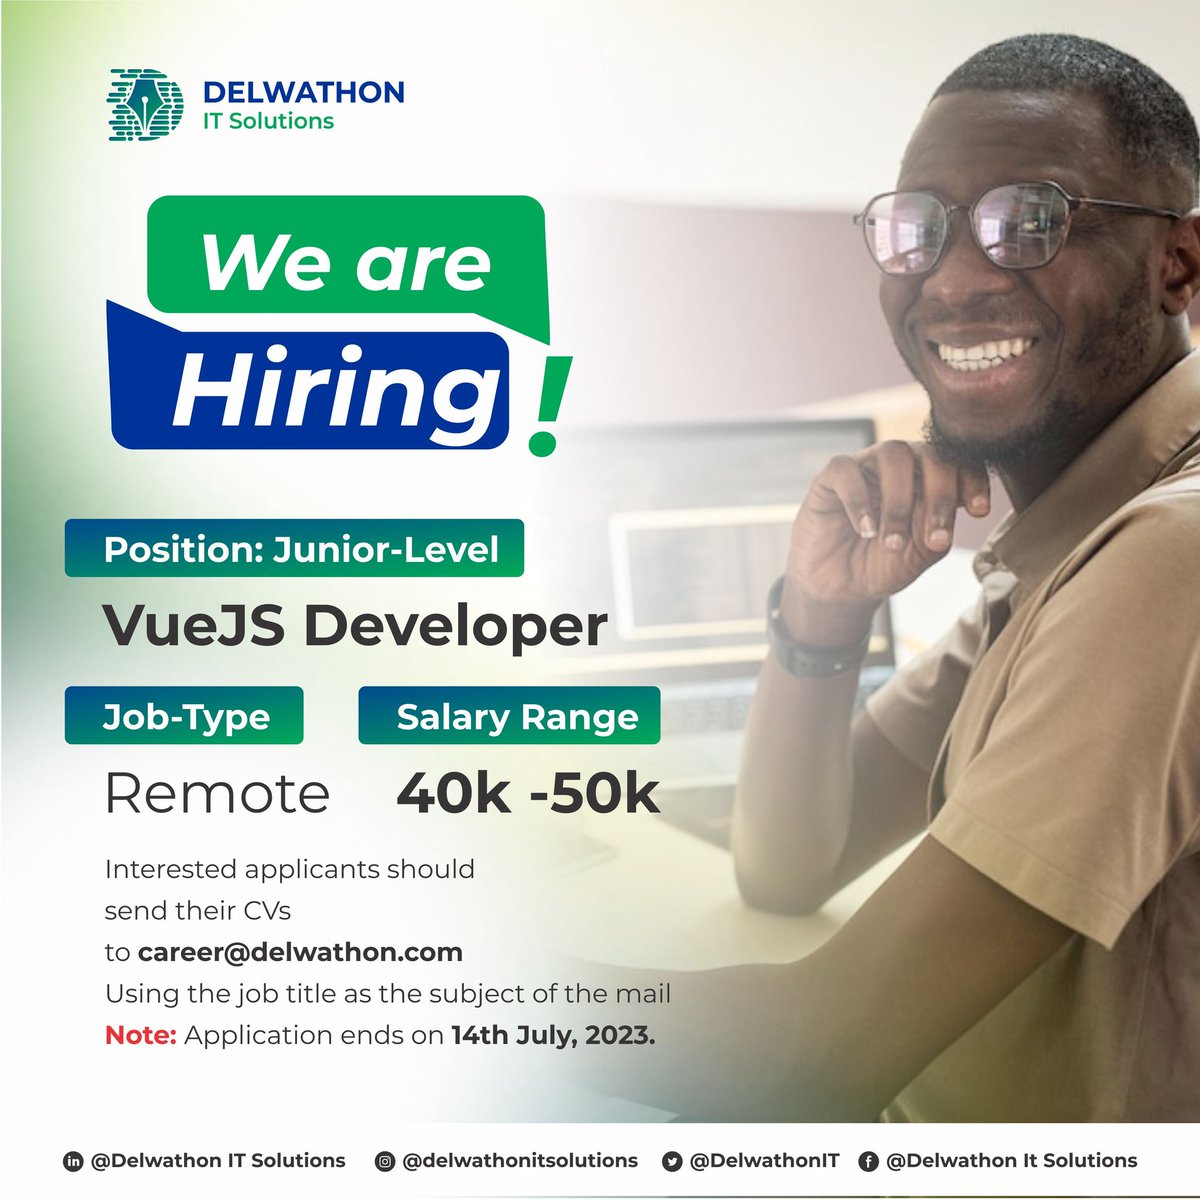 We are hiring a junior VueJS Developer 

Job type: Remote

Interested applicants should send their CV to career@delwathon.com 

#jobsearch #techcompany  #techsavvy #vacancy  #jobsinnigeria #careeropportunities #Lagos #AbujaTwitterCommunity